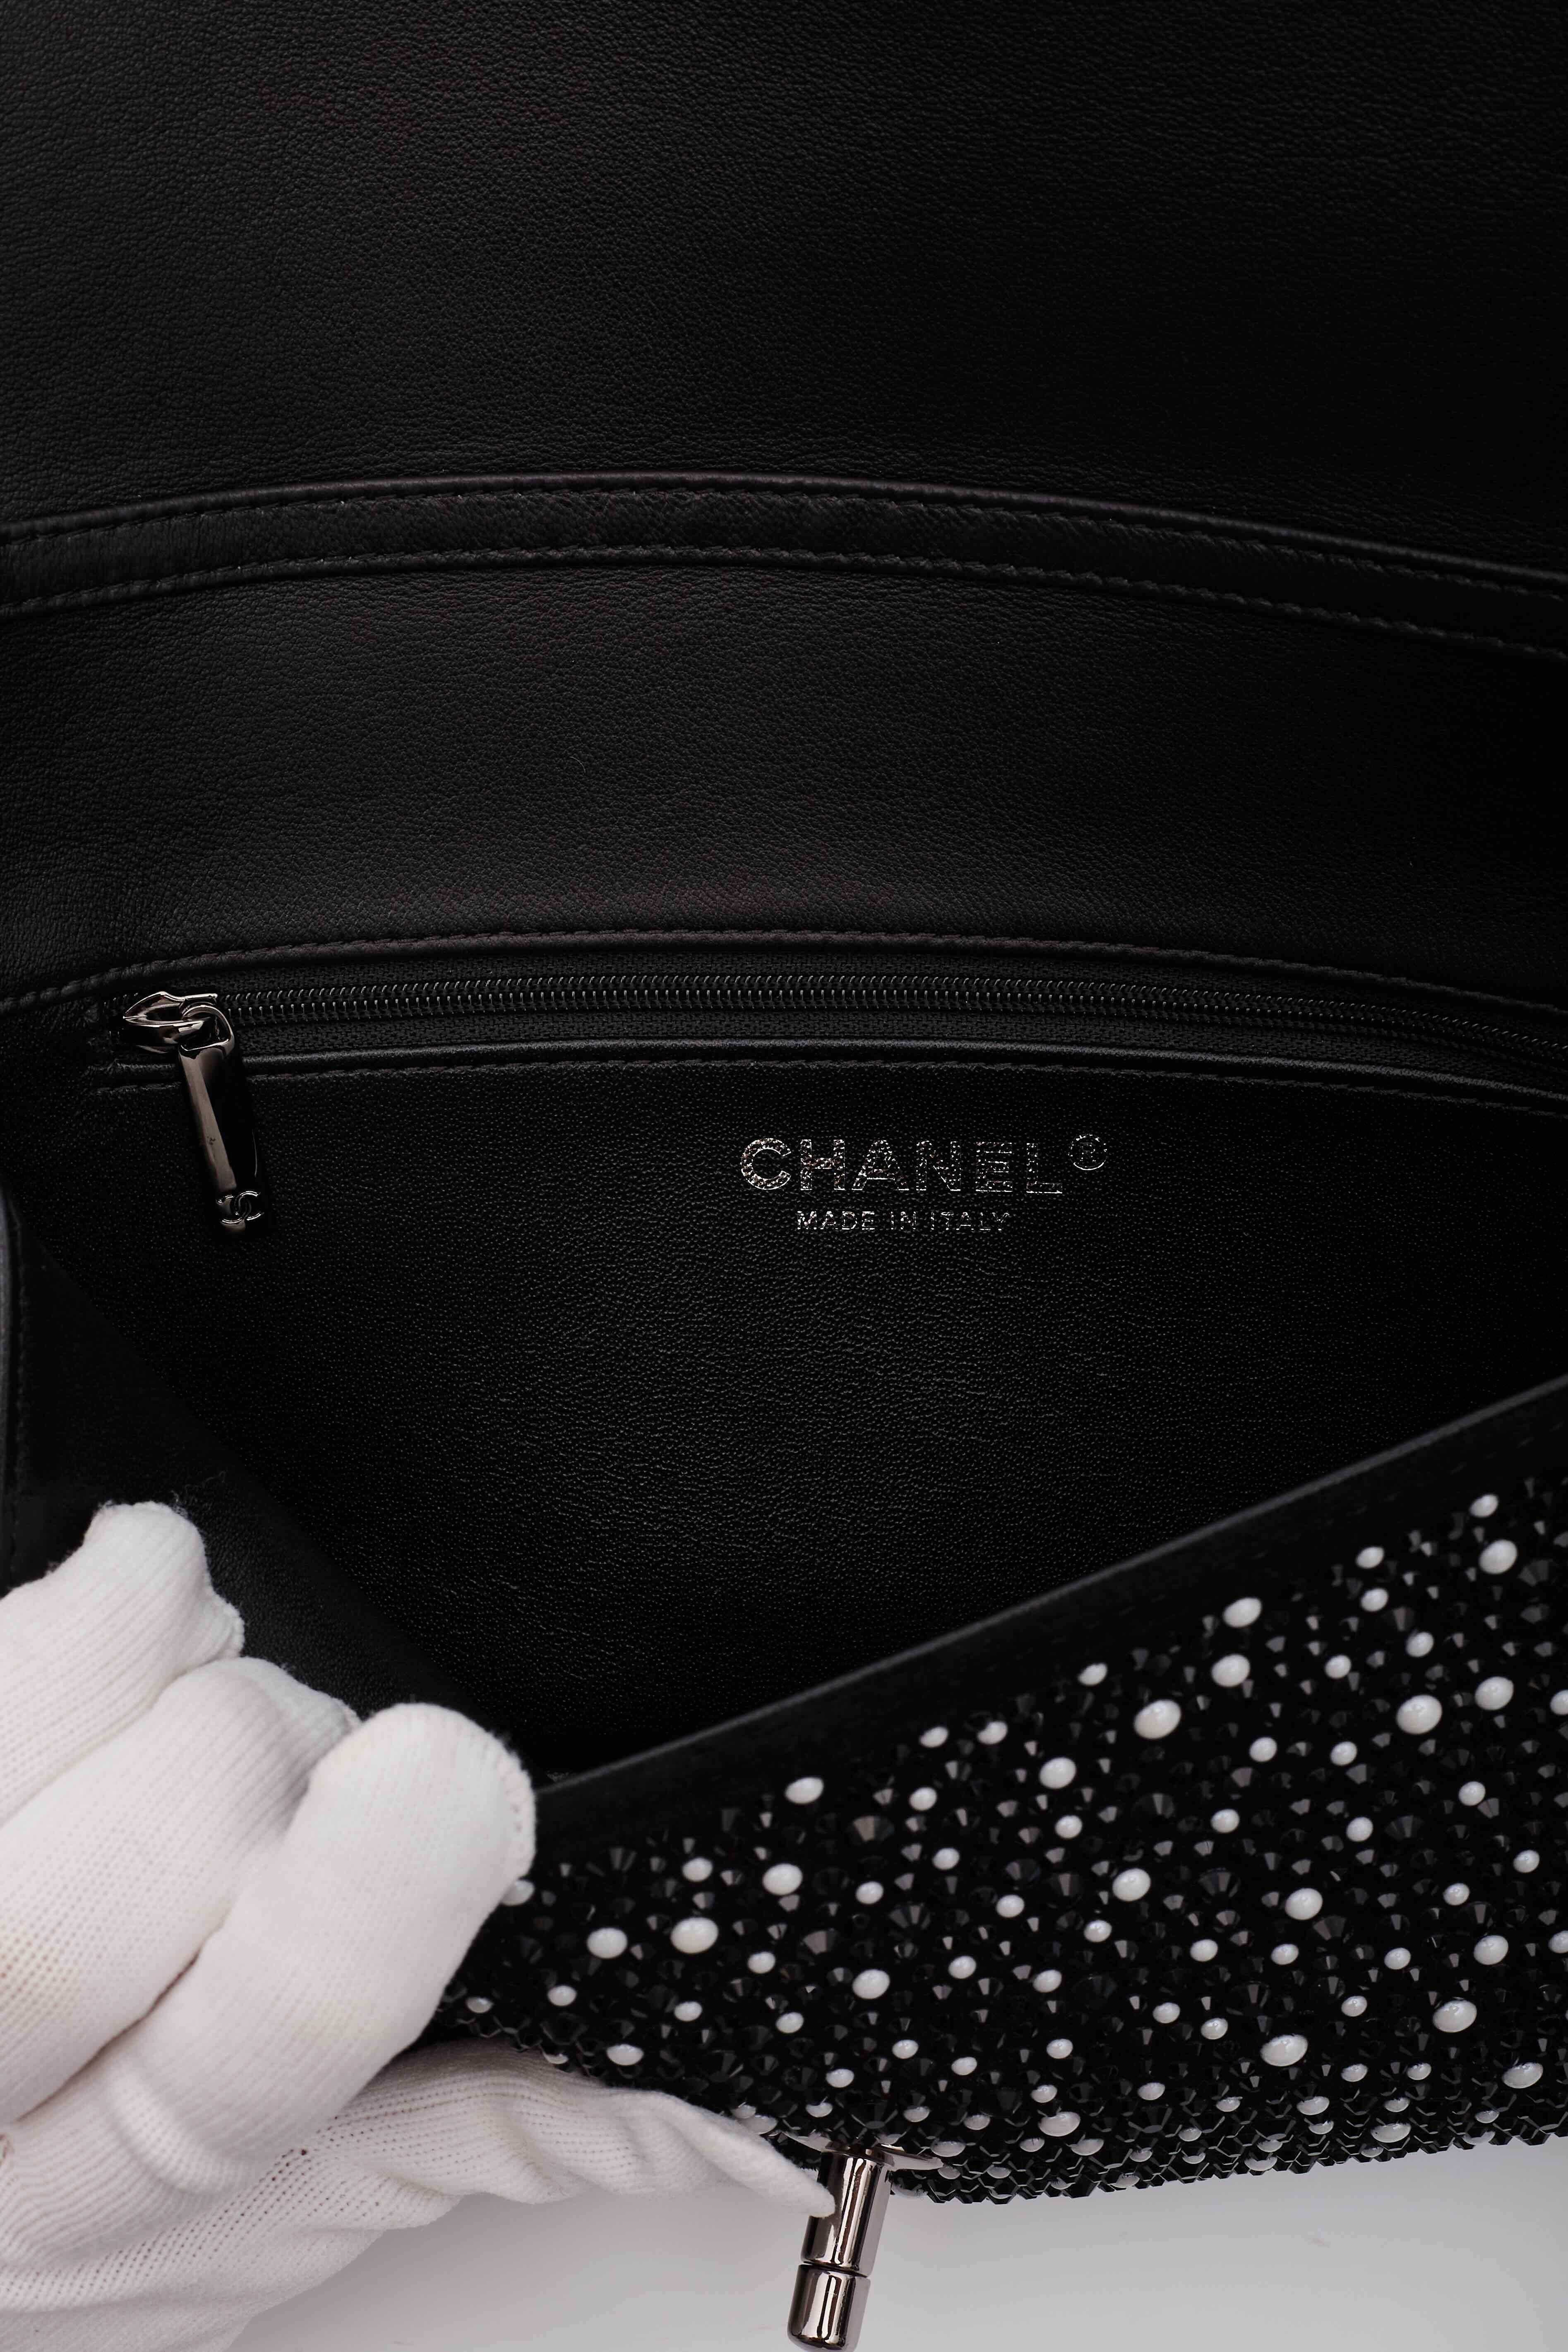 Chanel Strass Crystal Pearls & Ruthenium Metal Shoulder Bag Black & White 4